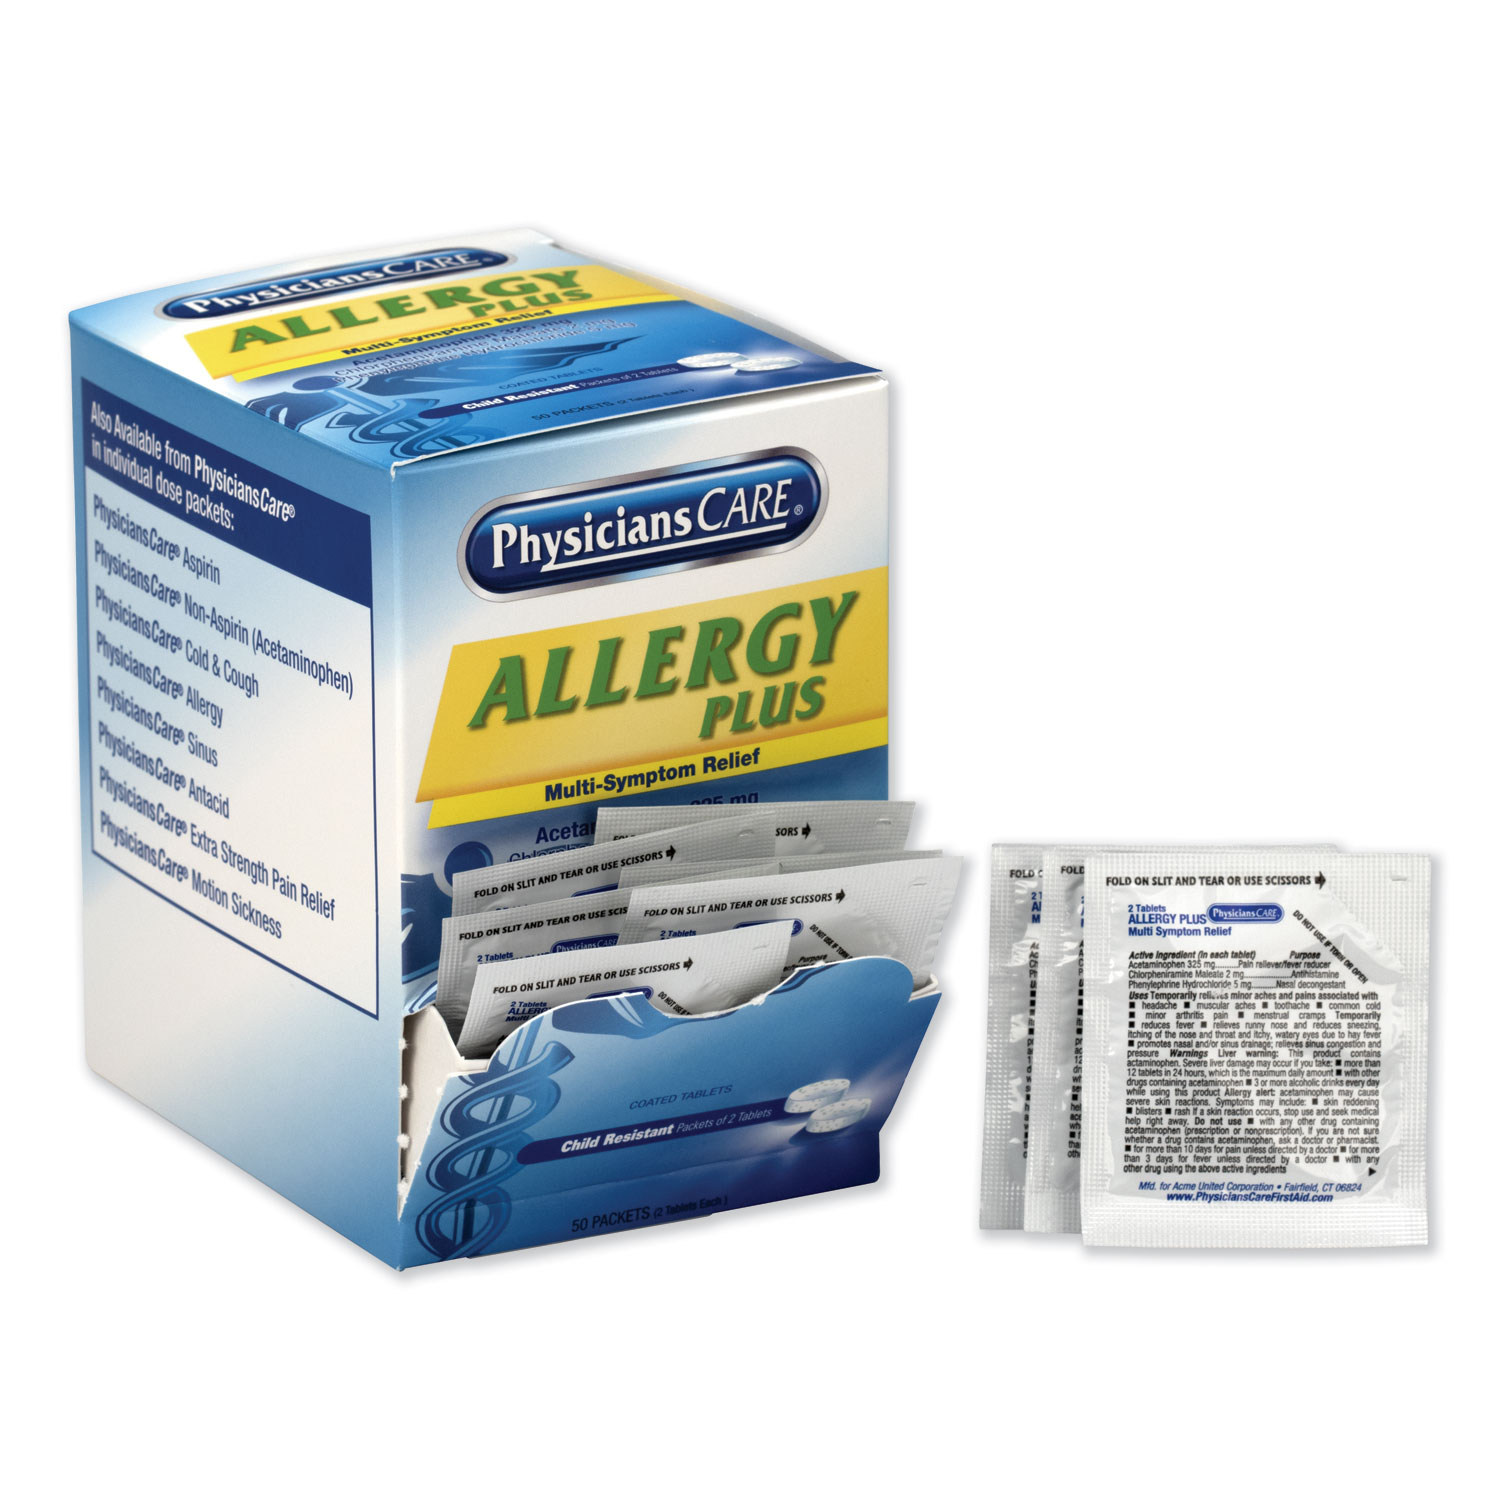  PhysiciansCare 90091-004 Allergy Antihistamine Medication, Two-Pack, 50 Packs/Box (ACM90091) 